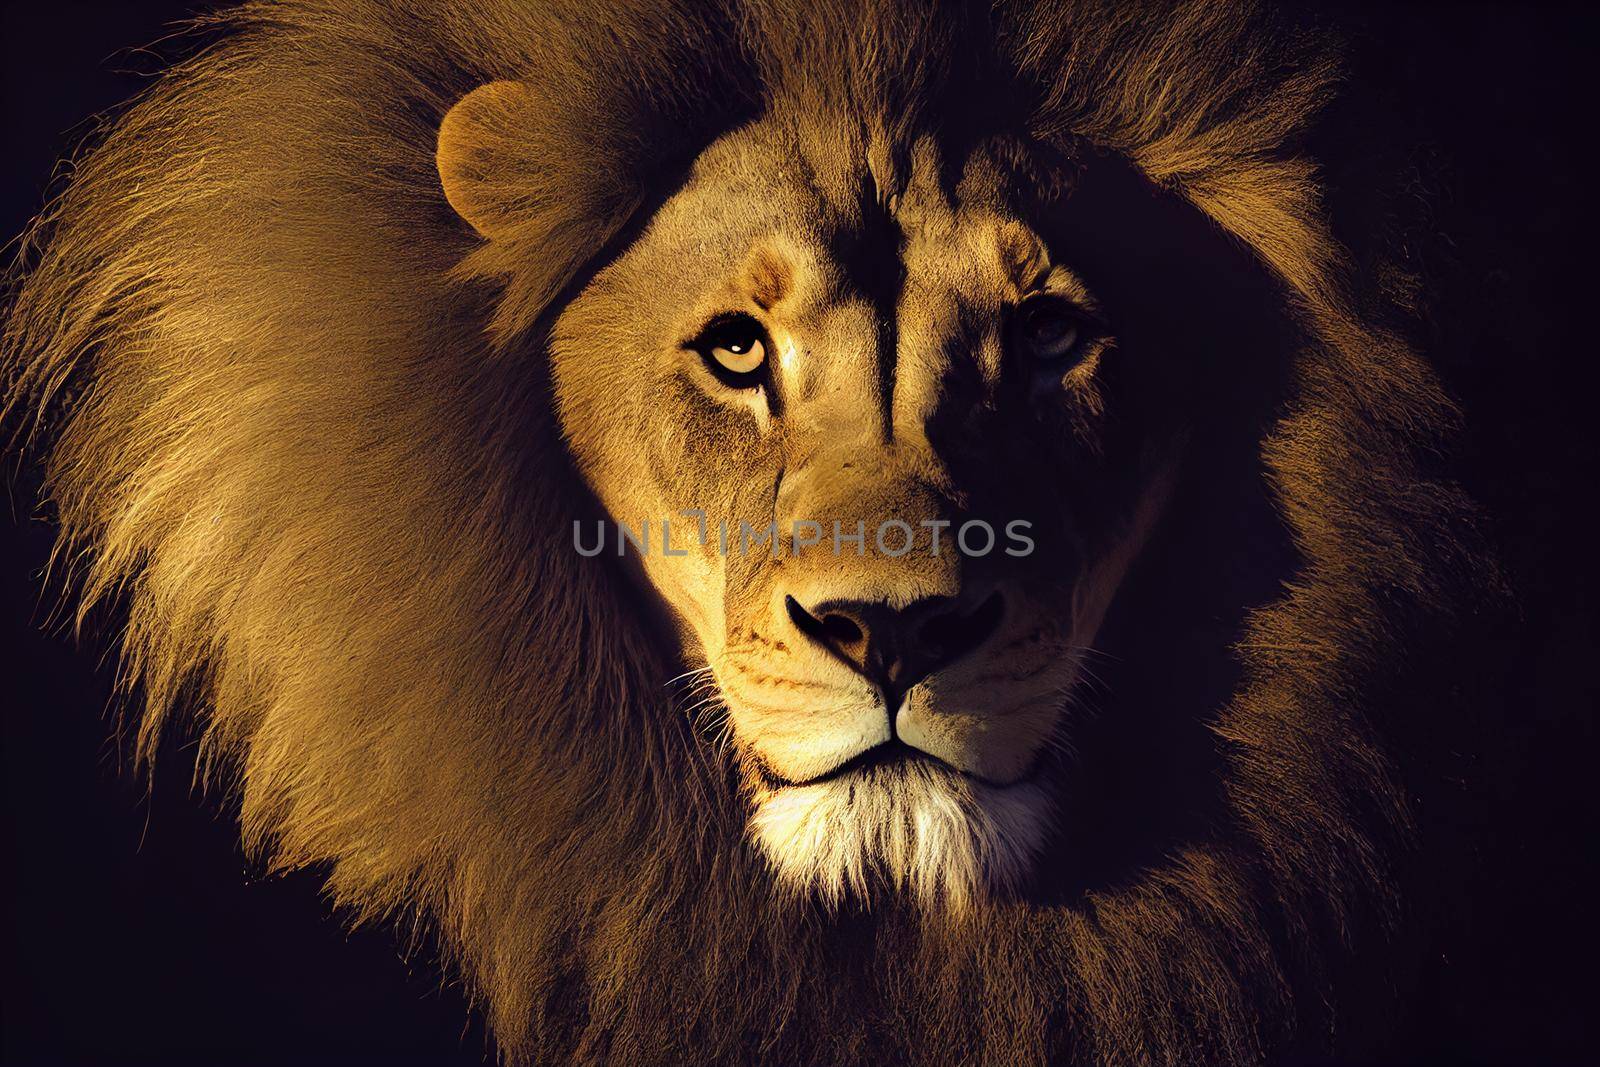 portrait of a lion. Amazing portrait of a big Lion on Black background. King face. Close-up of wild lion face